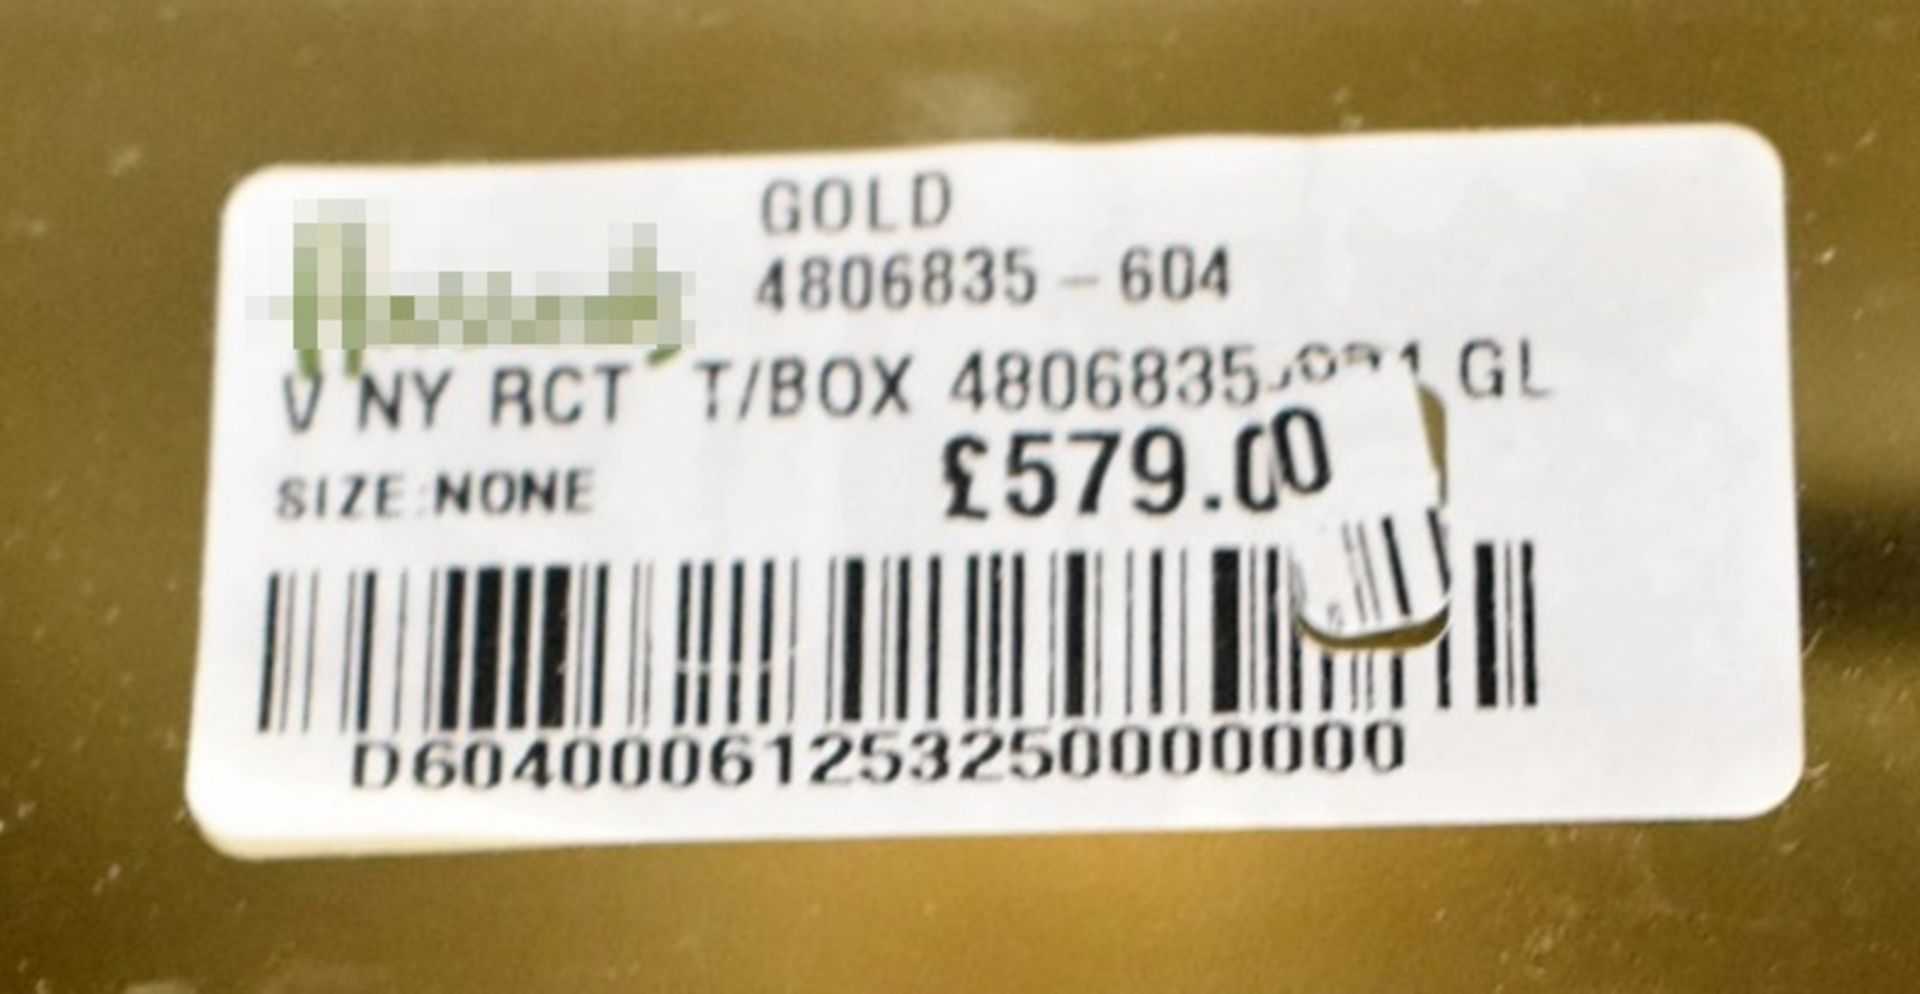 1 x VILLARI 'Hiroito' Luxury Italian Made Gold-Plated Tissue Box Cover - Original Price £579.00 - Image 6 of 6